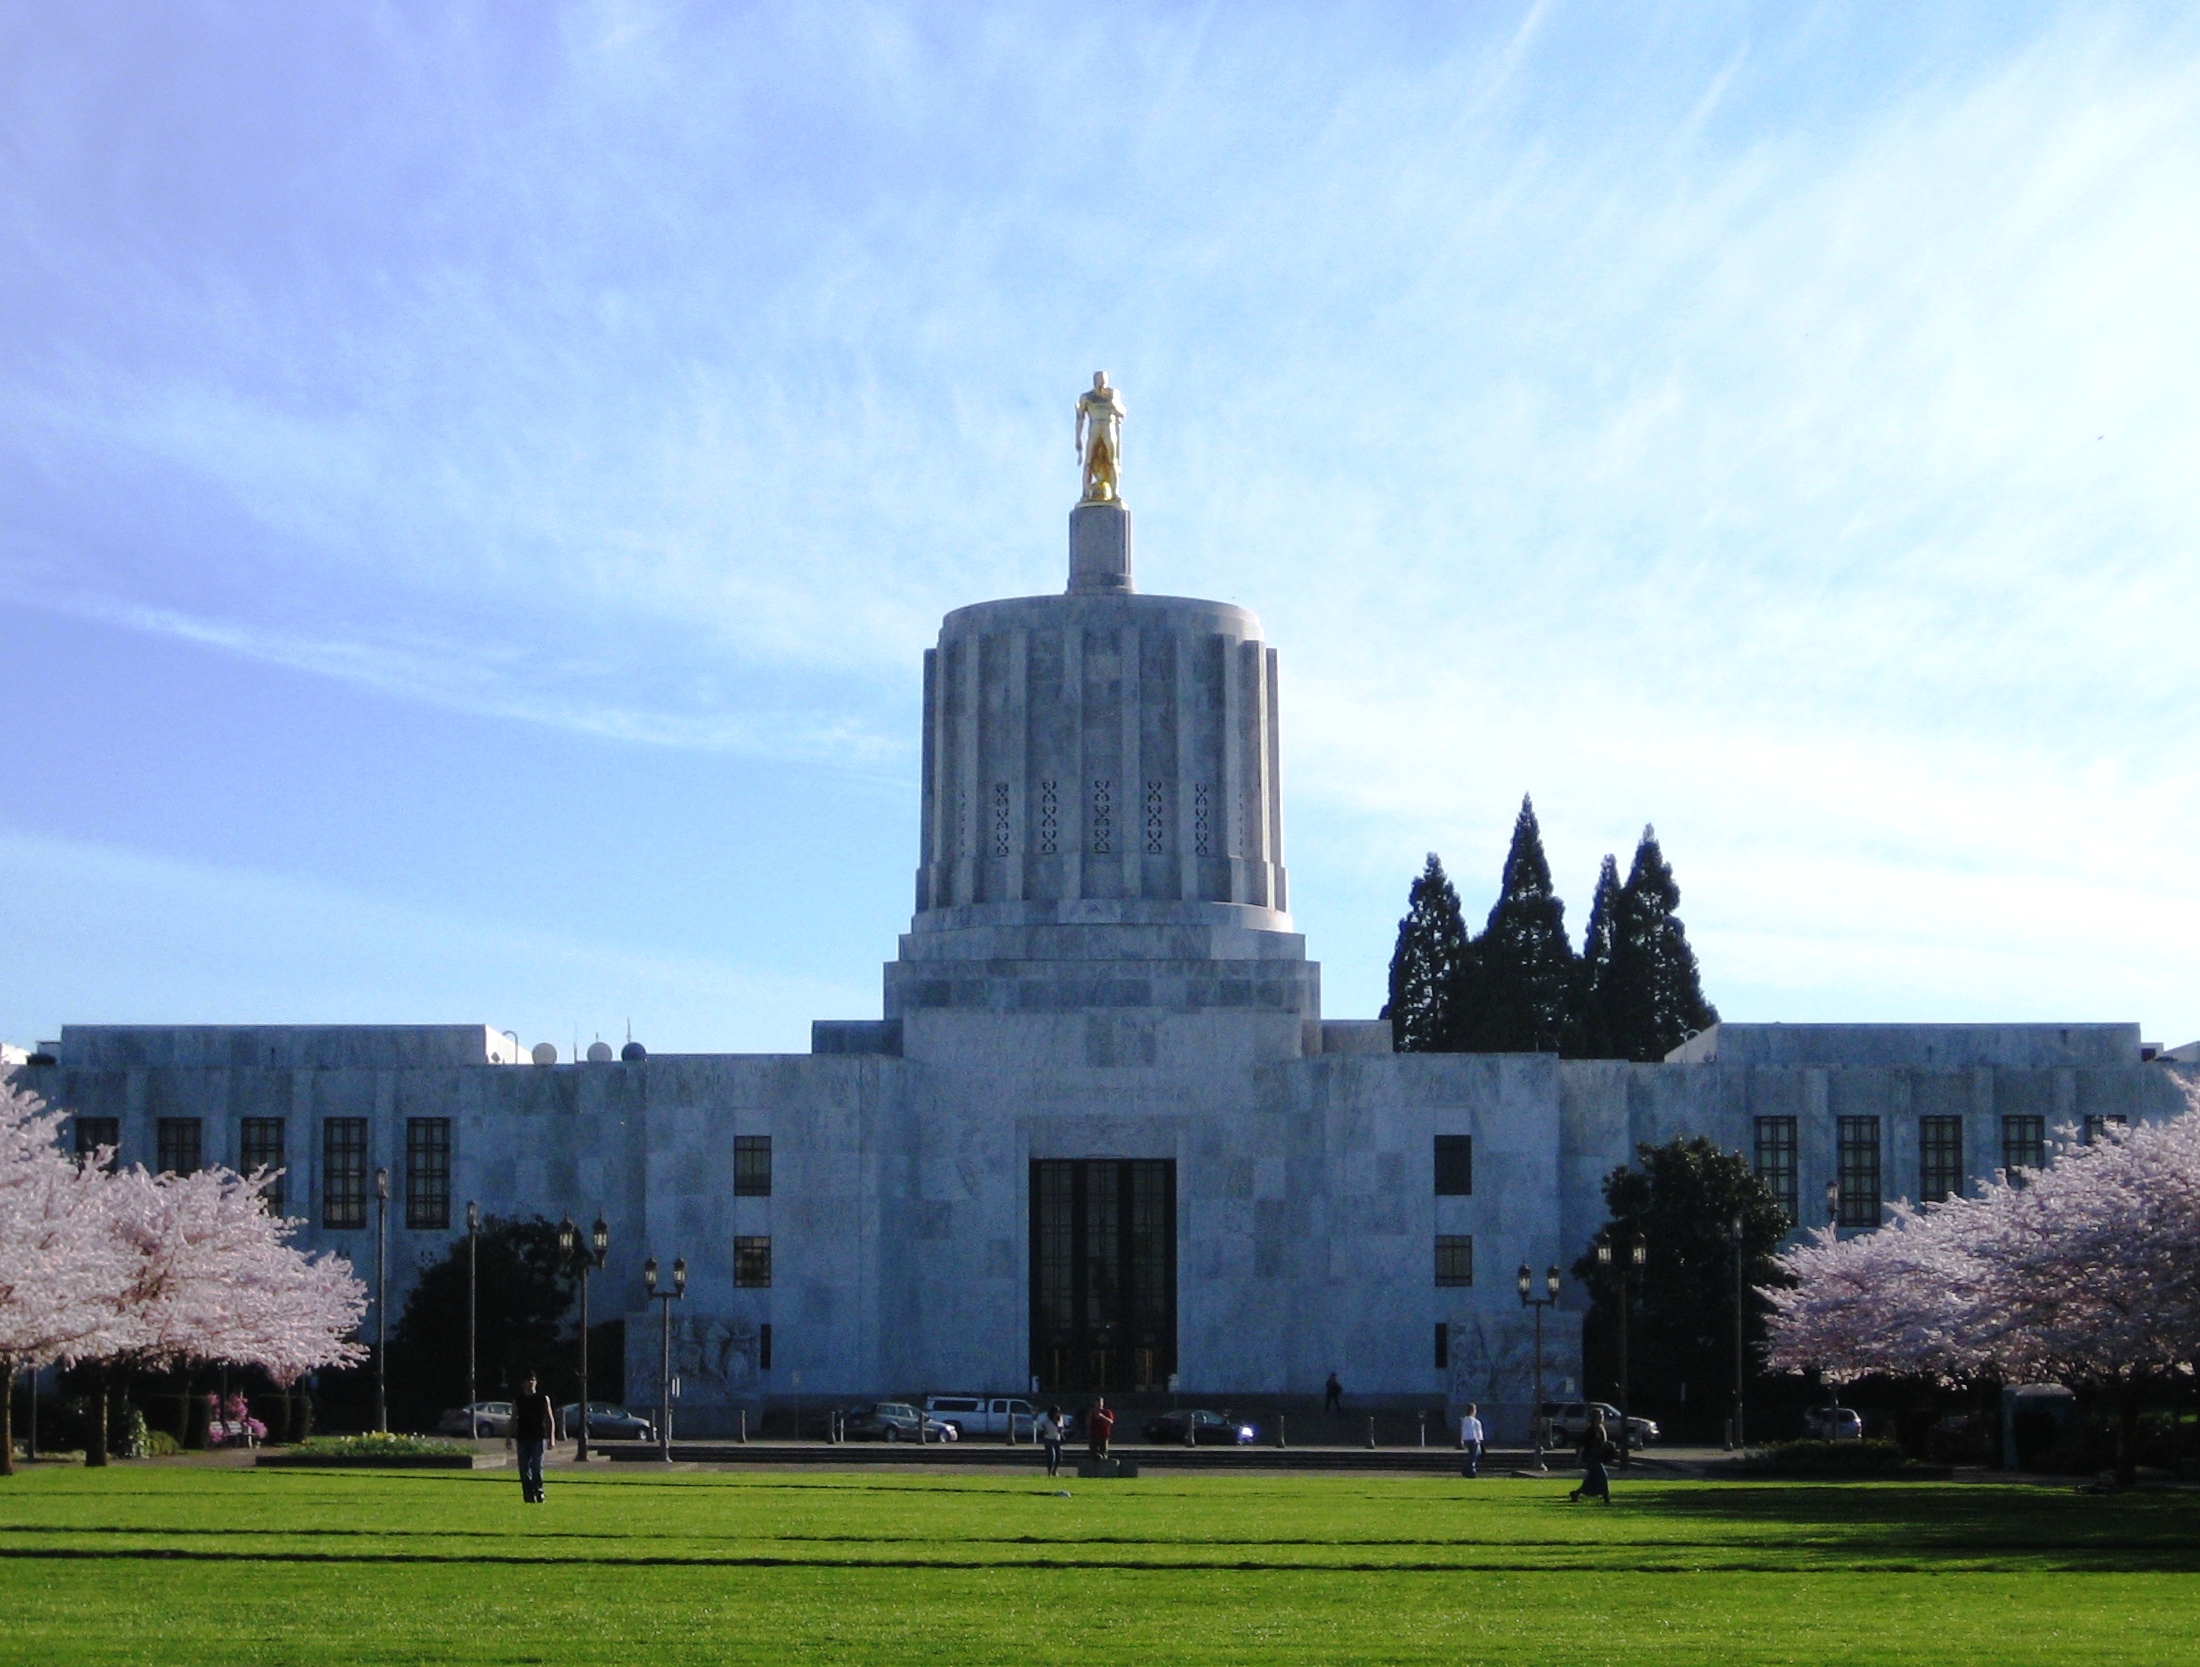 The Oregon state capitol building in Salem, Oregon.